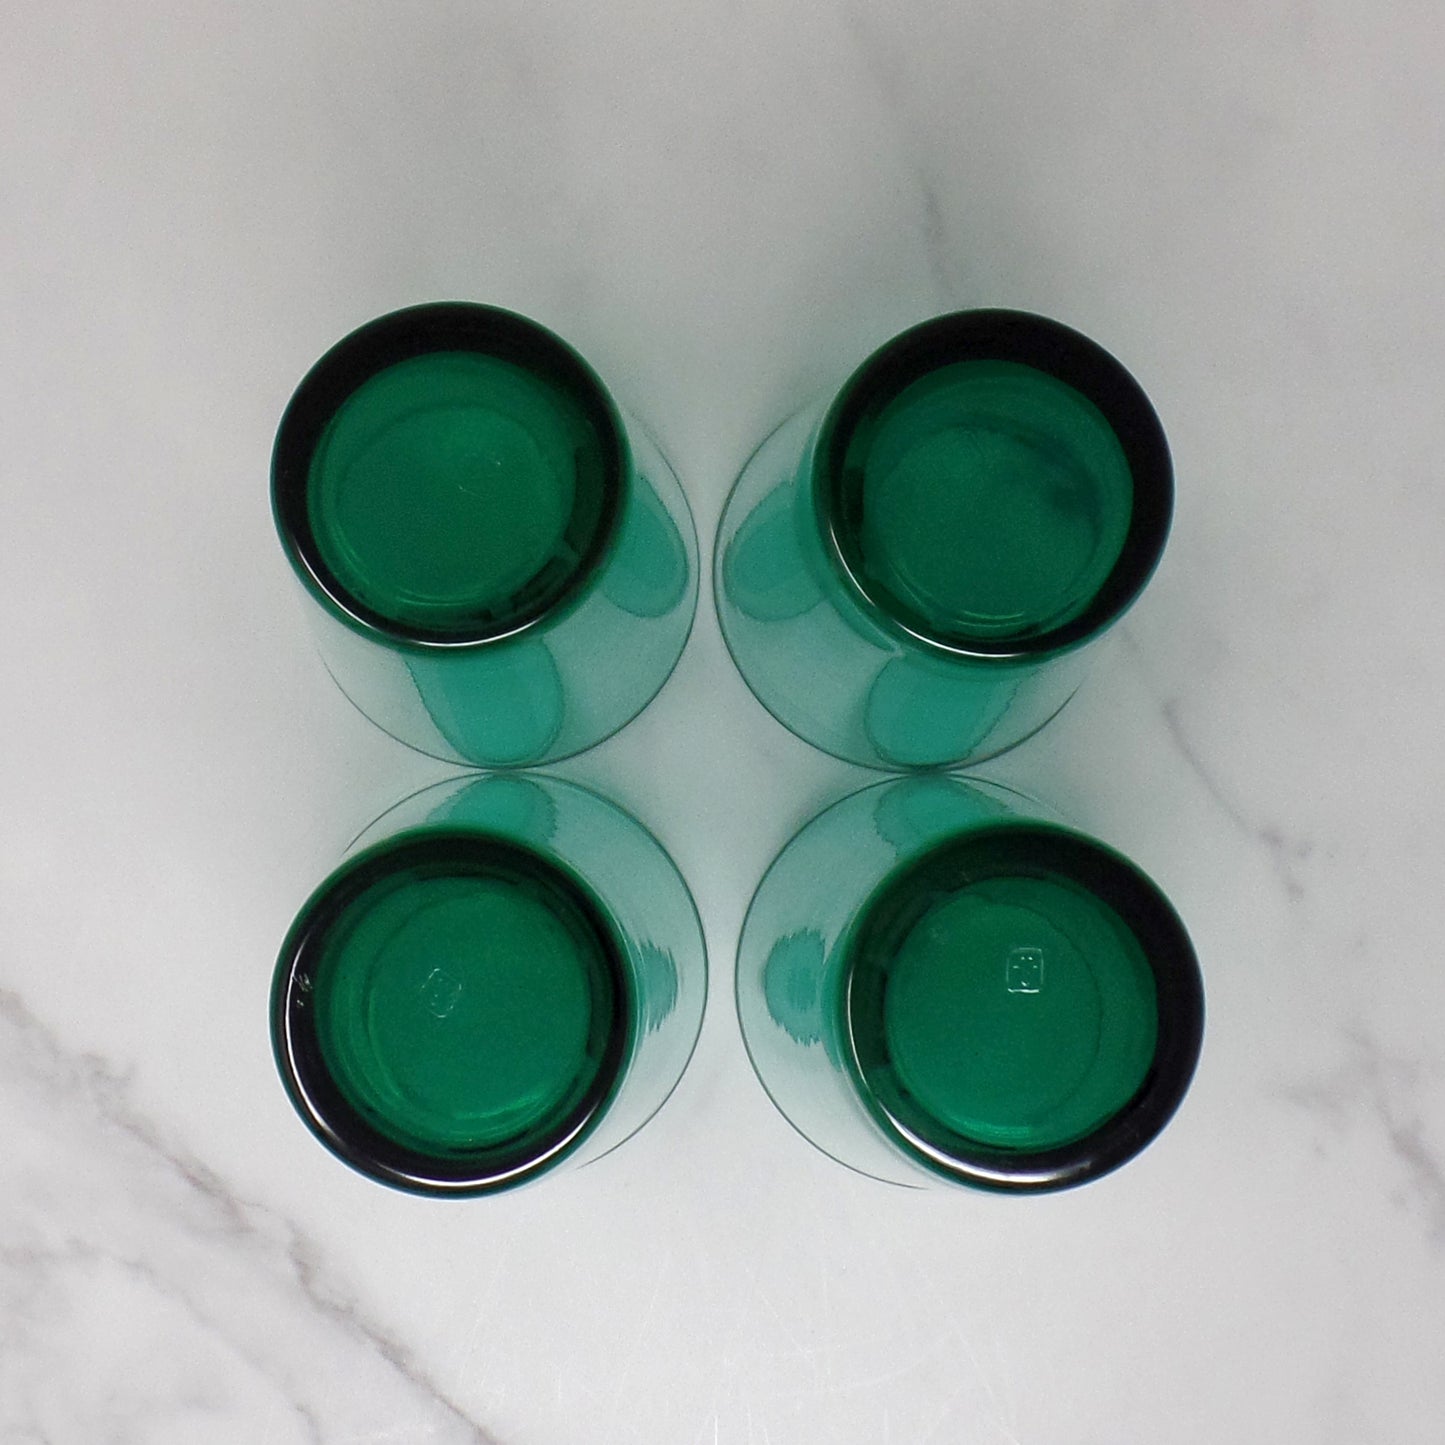 Vintage Anchor Hocking Emerald Green Pint Glasses, 16 oz - set of 4